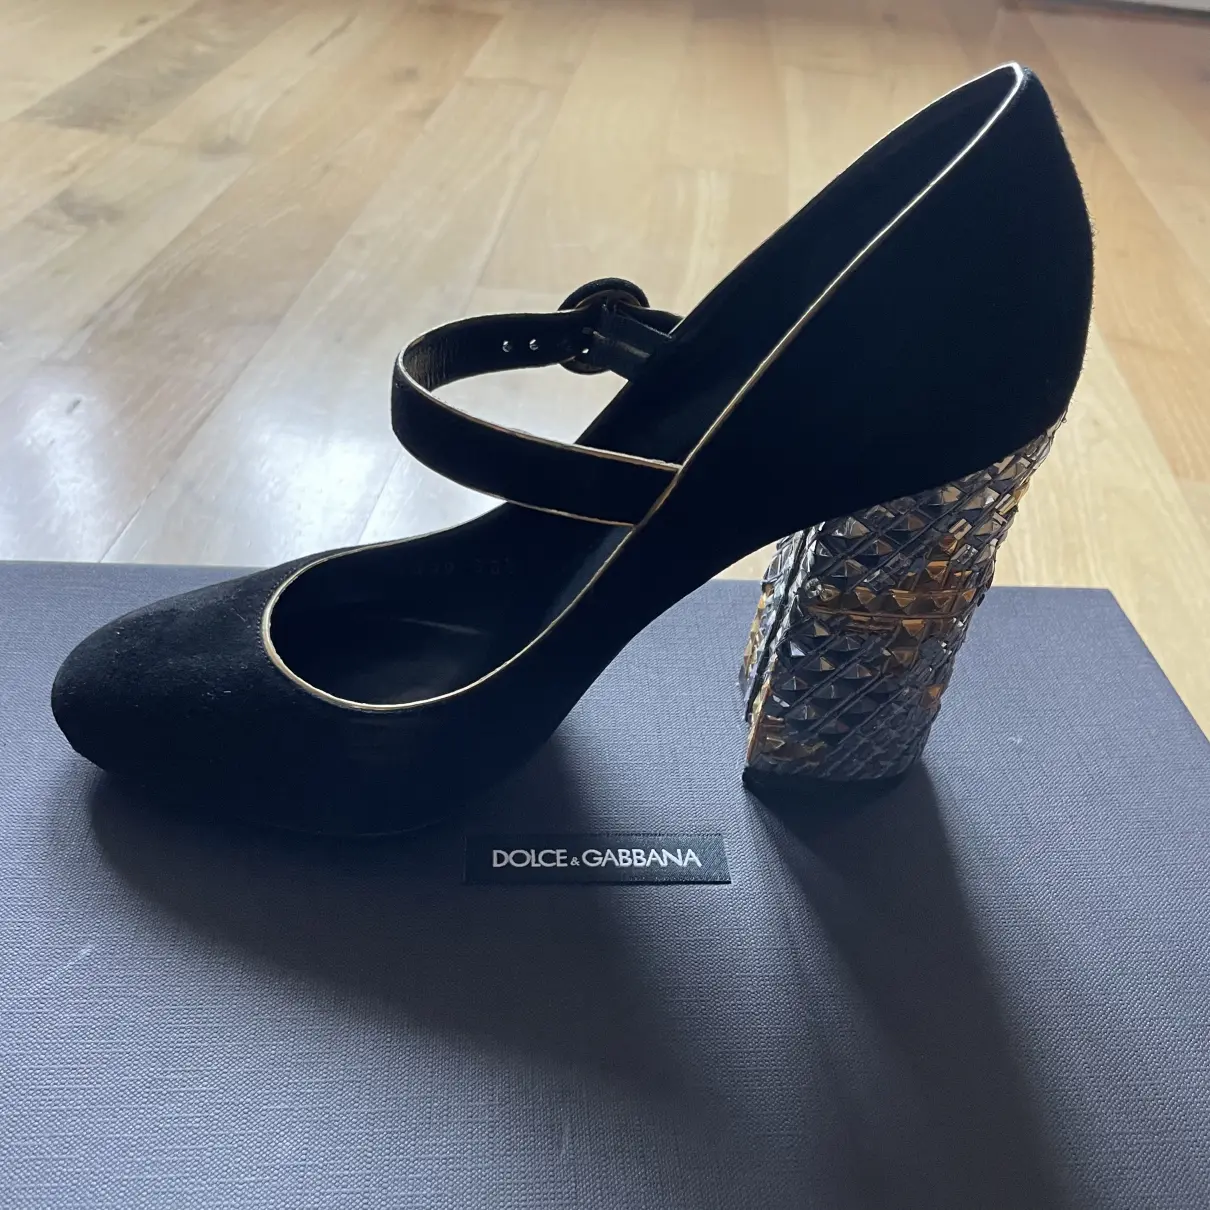 Buy Dolce & Gabbana Mary Jane heels online